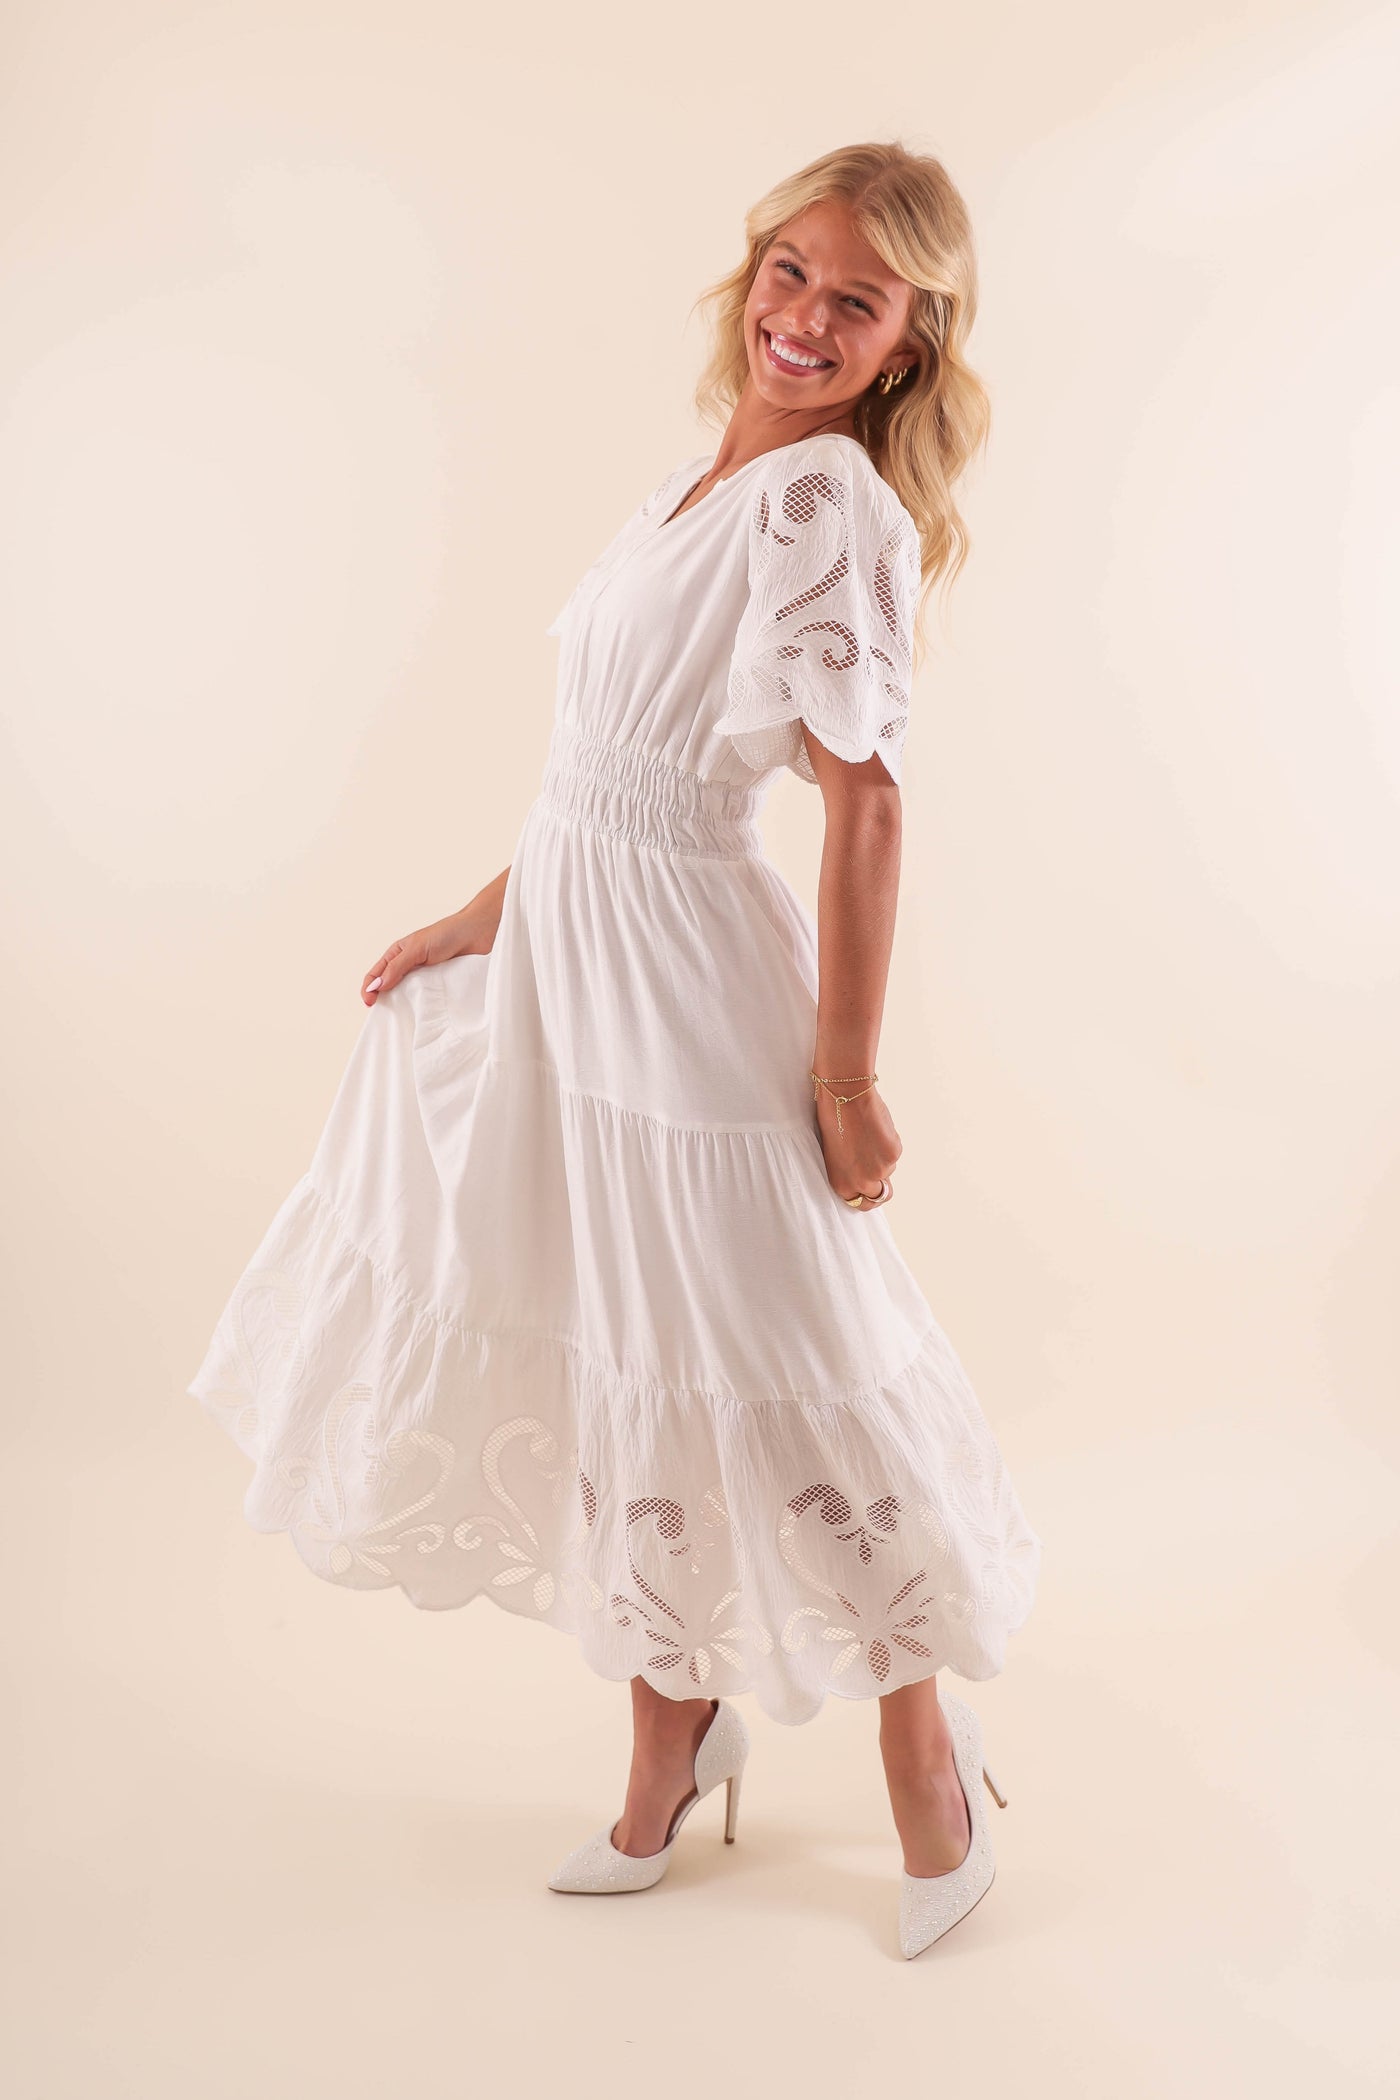 White Midi Dress with Scalloped Design - White Dress With Eyelet Design